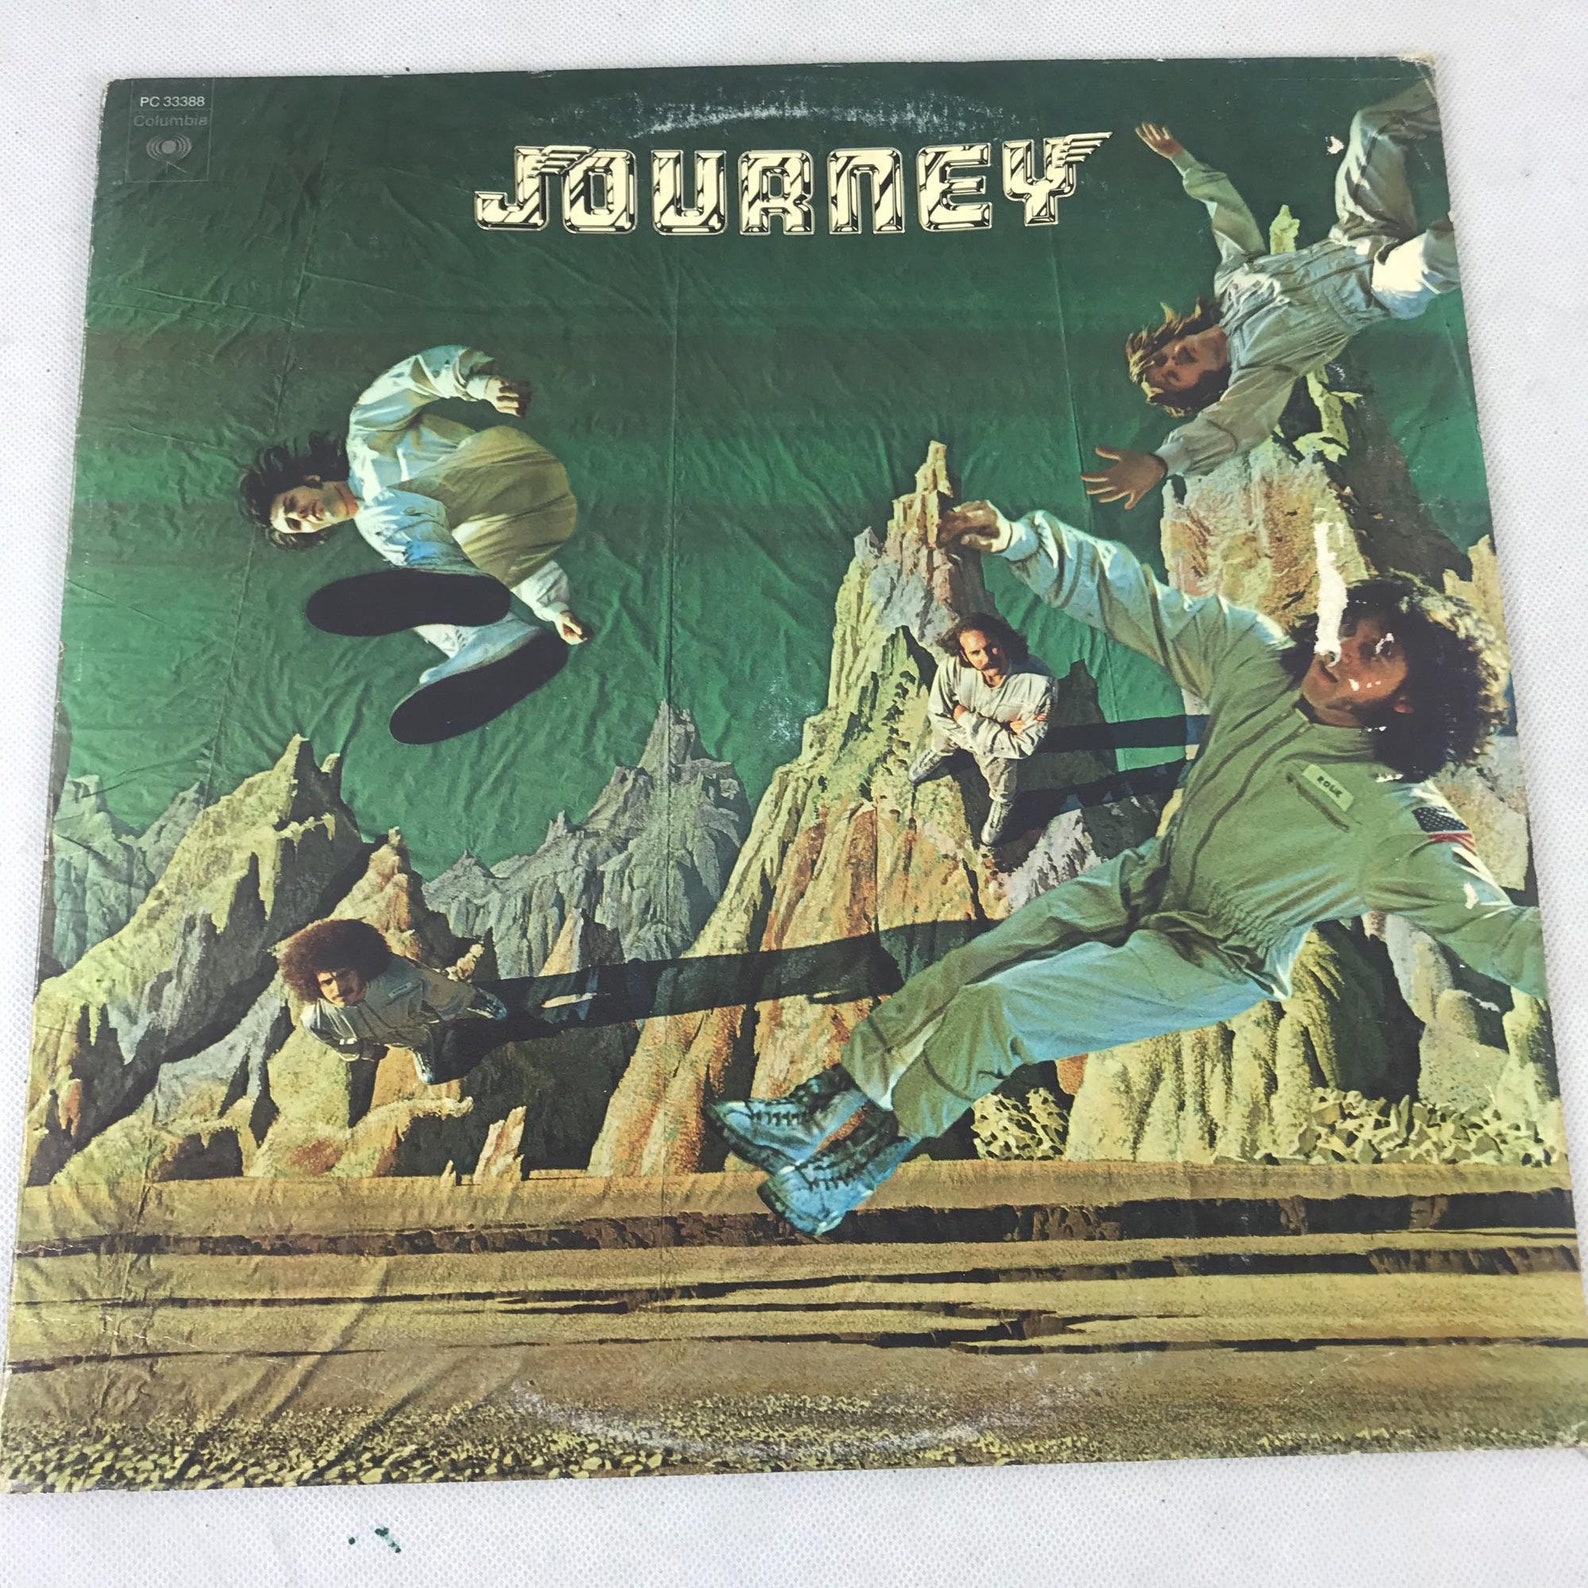 journey vinyl albums for sale